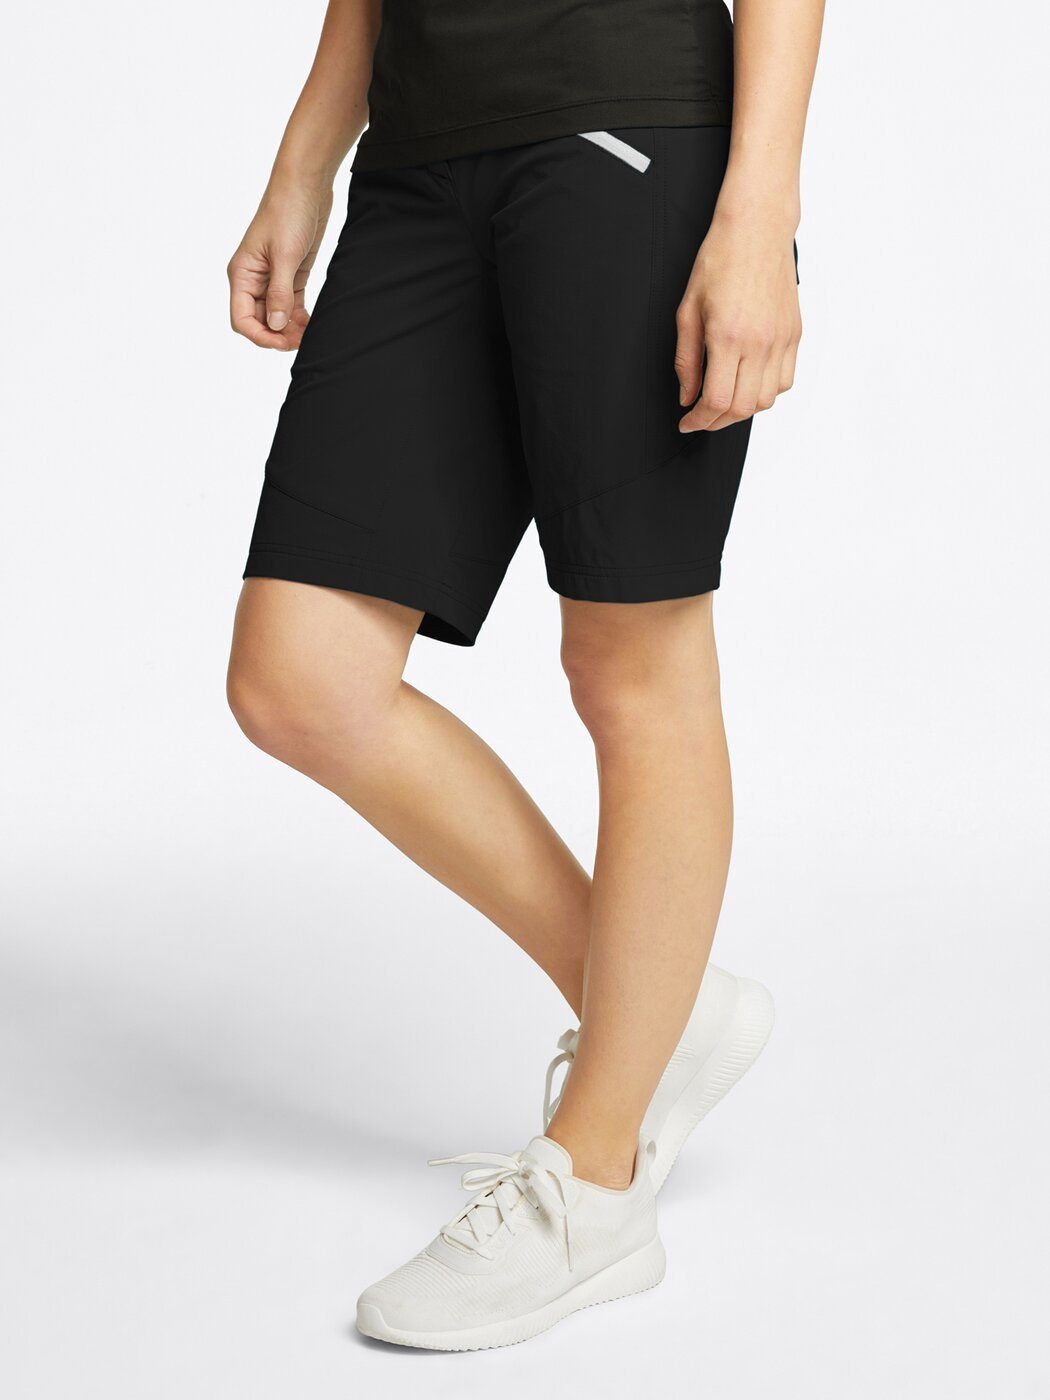 Shorts NASITA black.white 1201 Ziener (shorts) X-Function lady